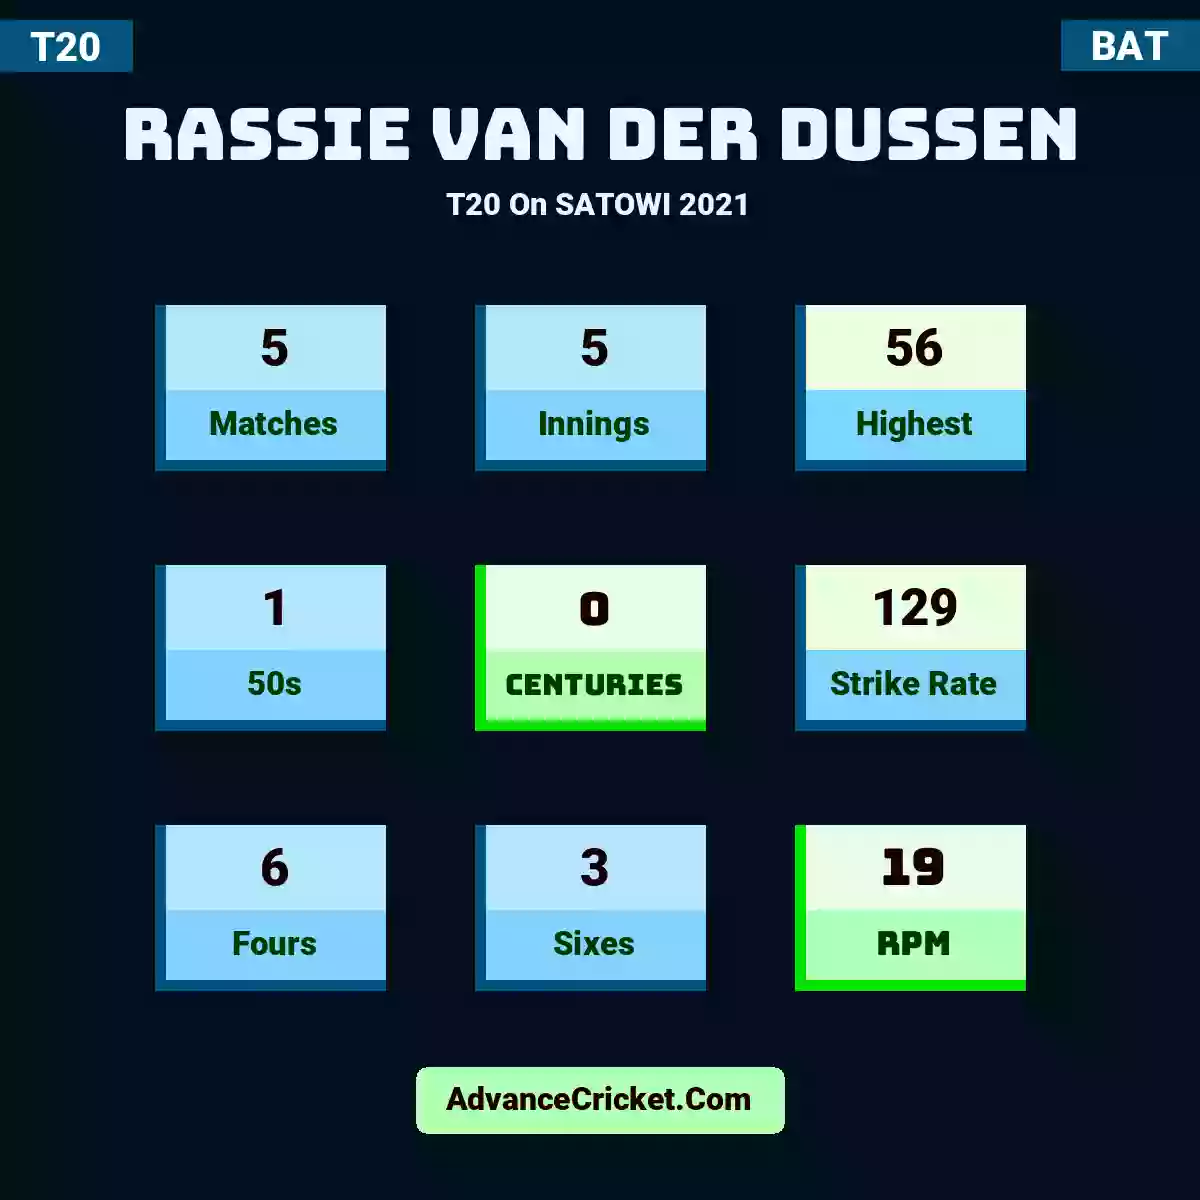 Rassie van der Dussen T20  On SATOWI 2021, Rassie van der Dussen played 5 matches, scored 56 runs as highest, 1 half-centuries, and 0 centuries, with a strike rate of 129. R.Dussen hit 6 fours and 3 sixes, with an RPM of 19.